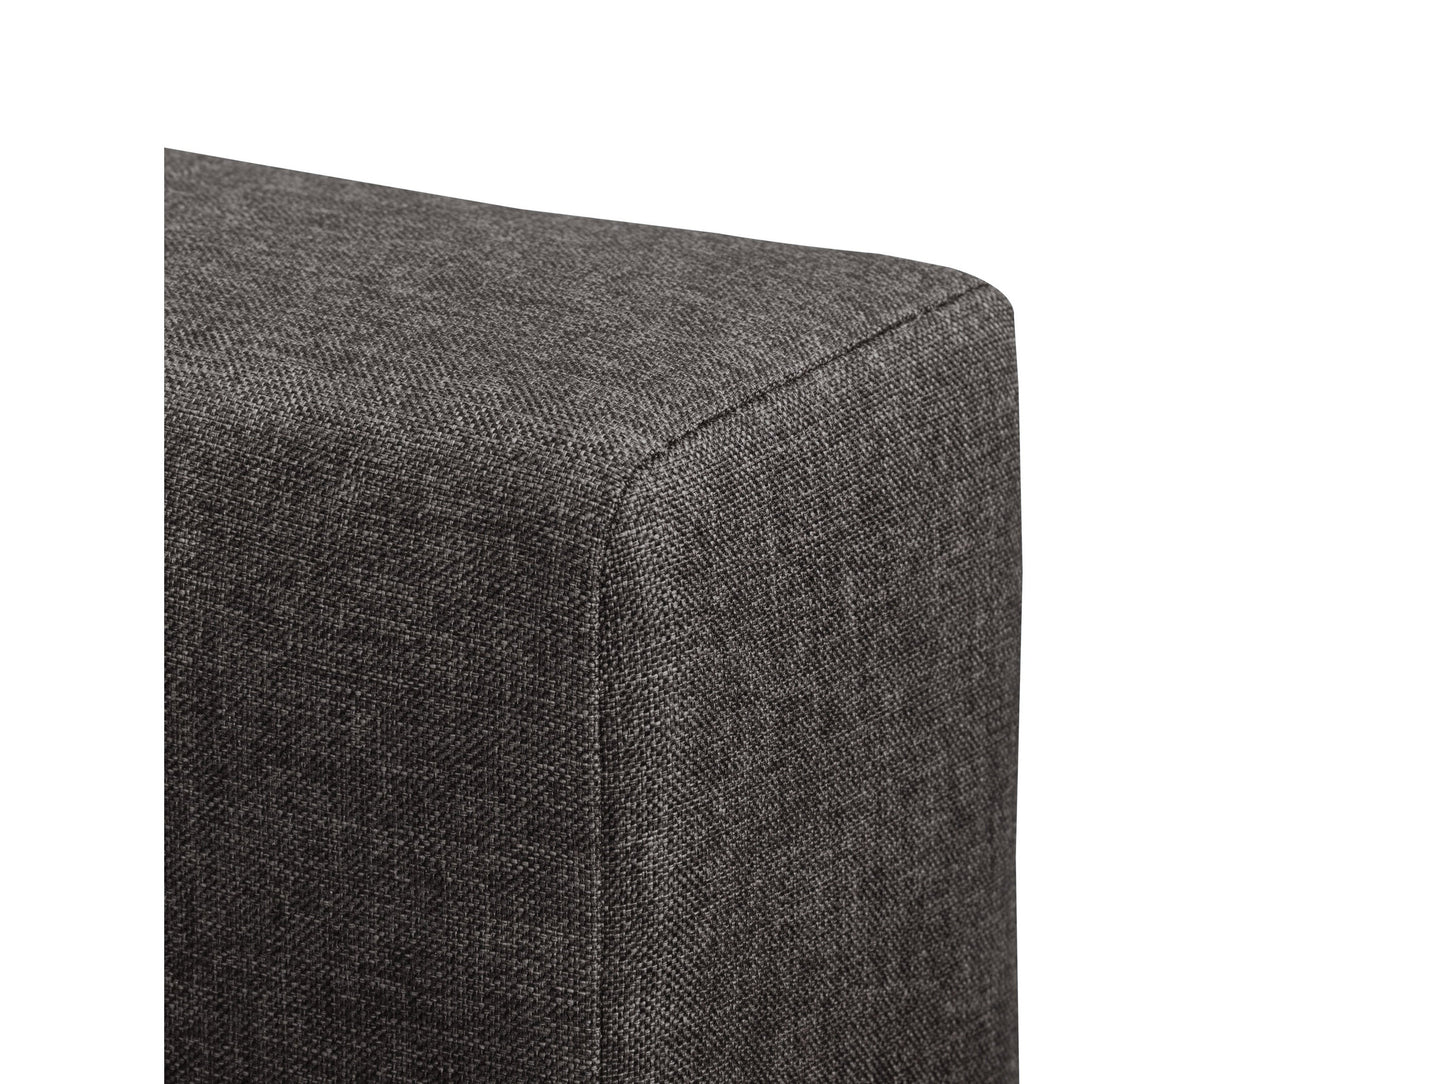 dark grey Button Tufted Twin / Single Bed Nova Ridge Collection detail image by CorLiving#color_nova-ridge-dark-grey